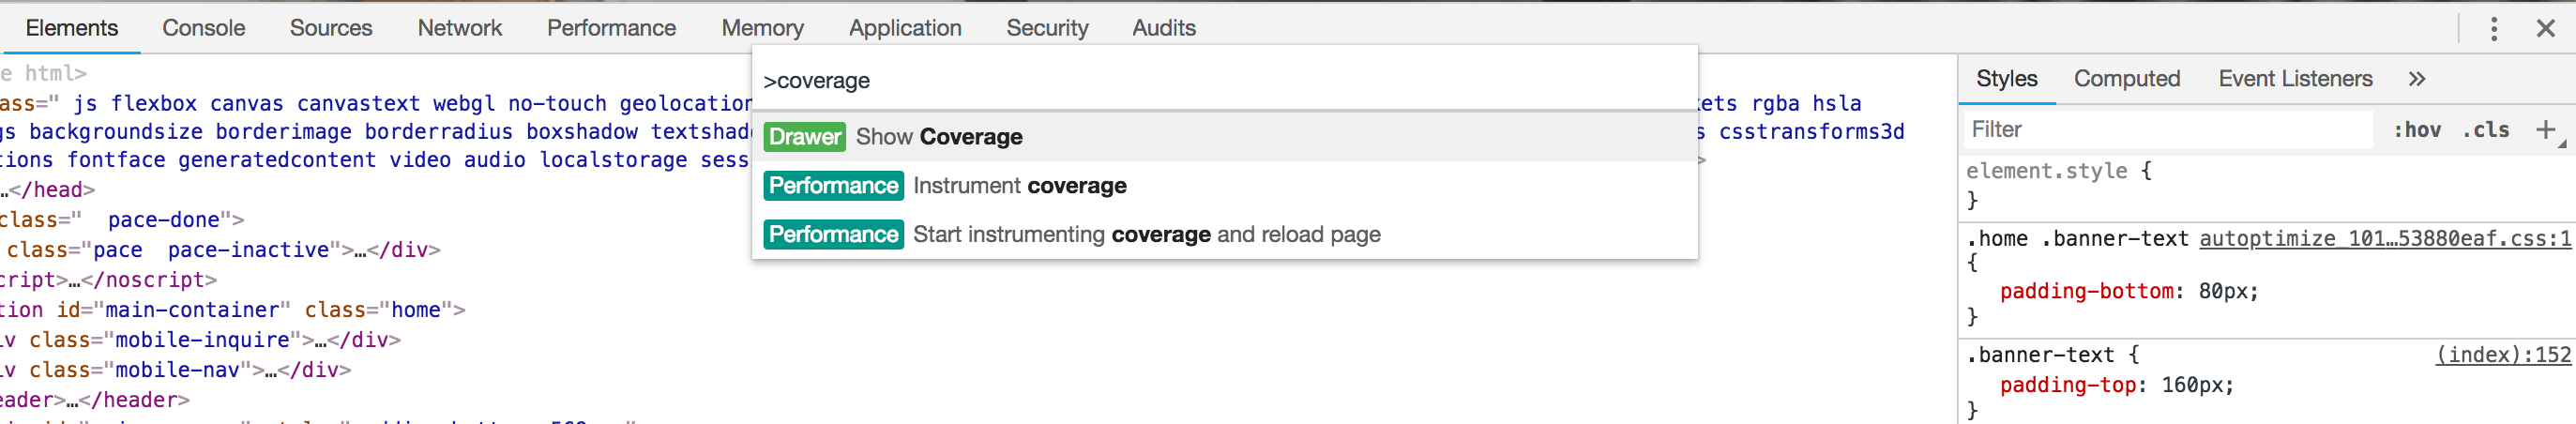 Google coverage tool